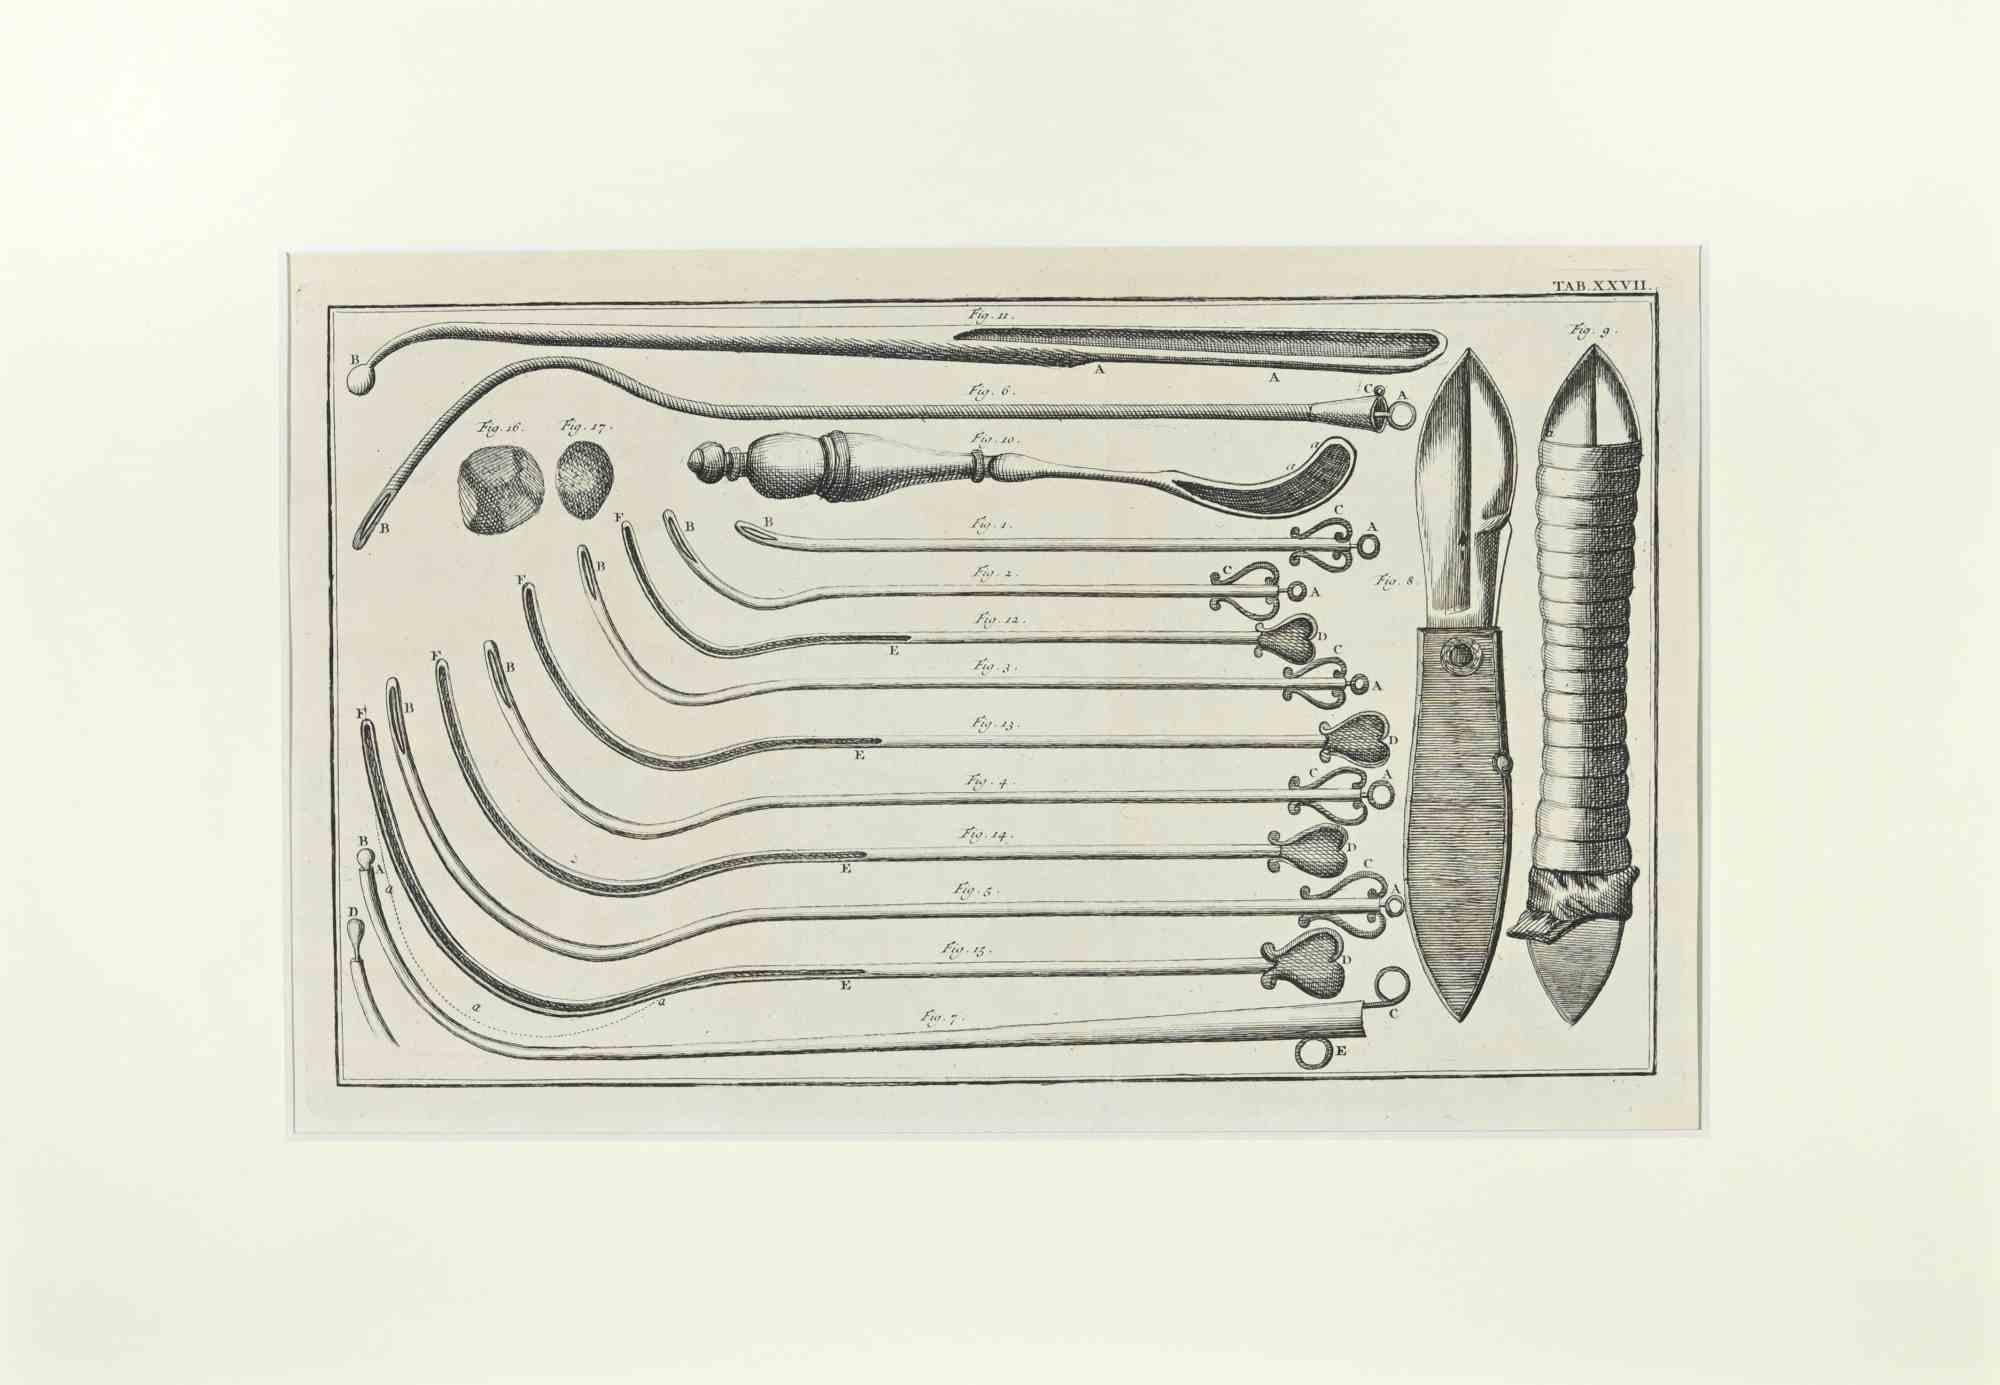 Instruments médicaux - gravure de Lorenz Heister - 1750